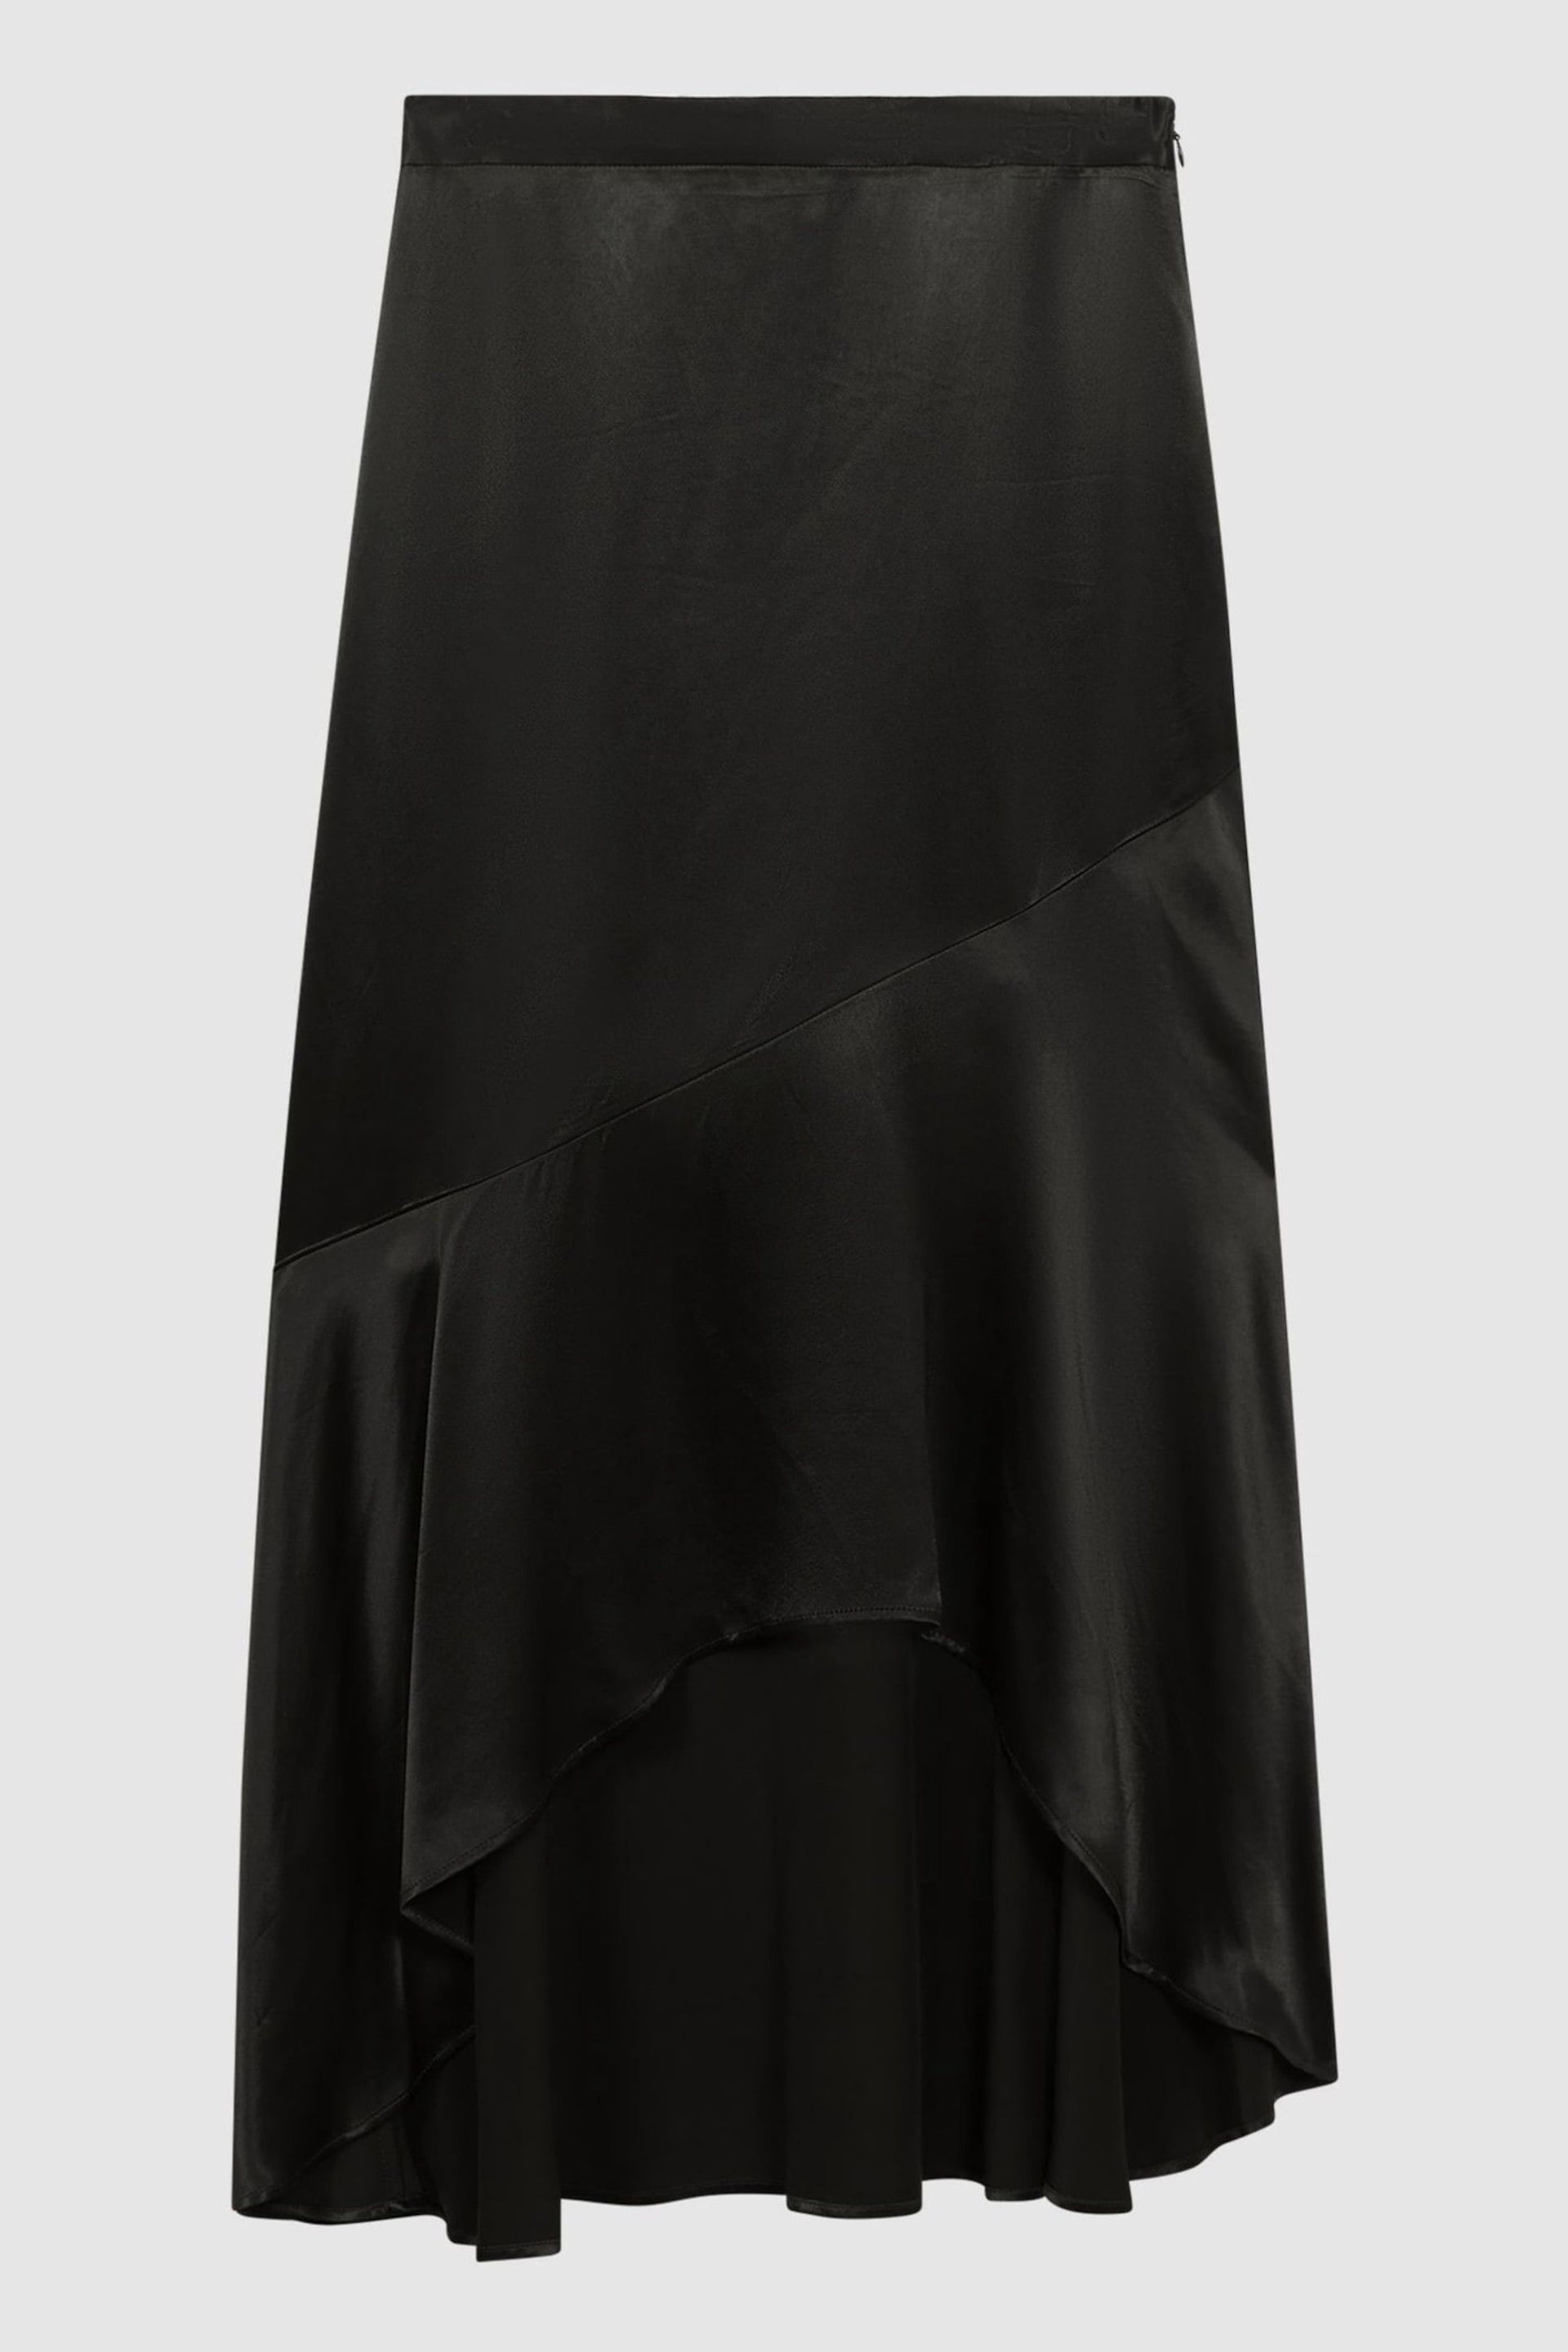 Reiss Black Inga Satin High Rise Midi Skirt - Image 2 of 6